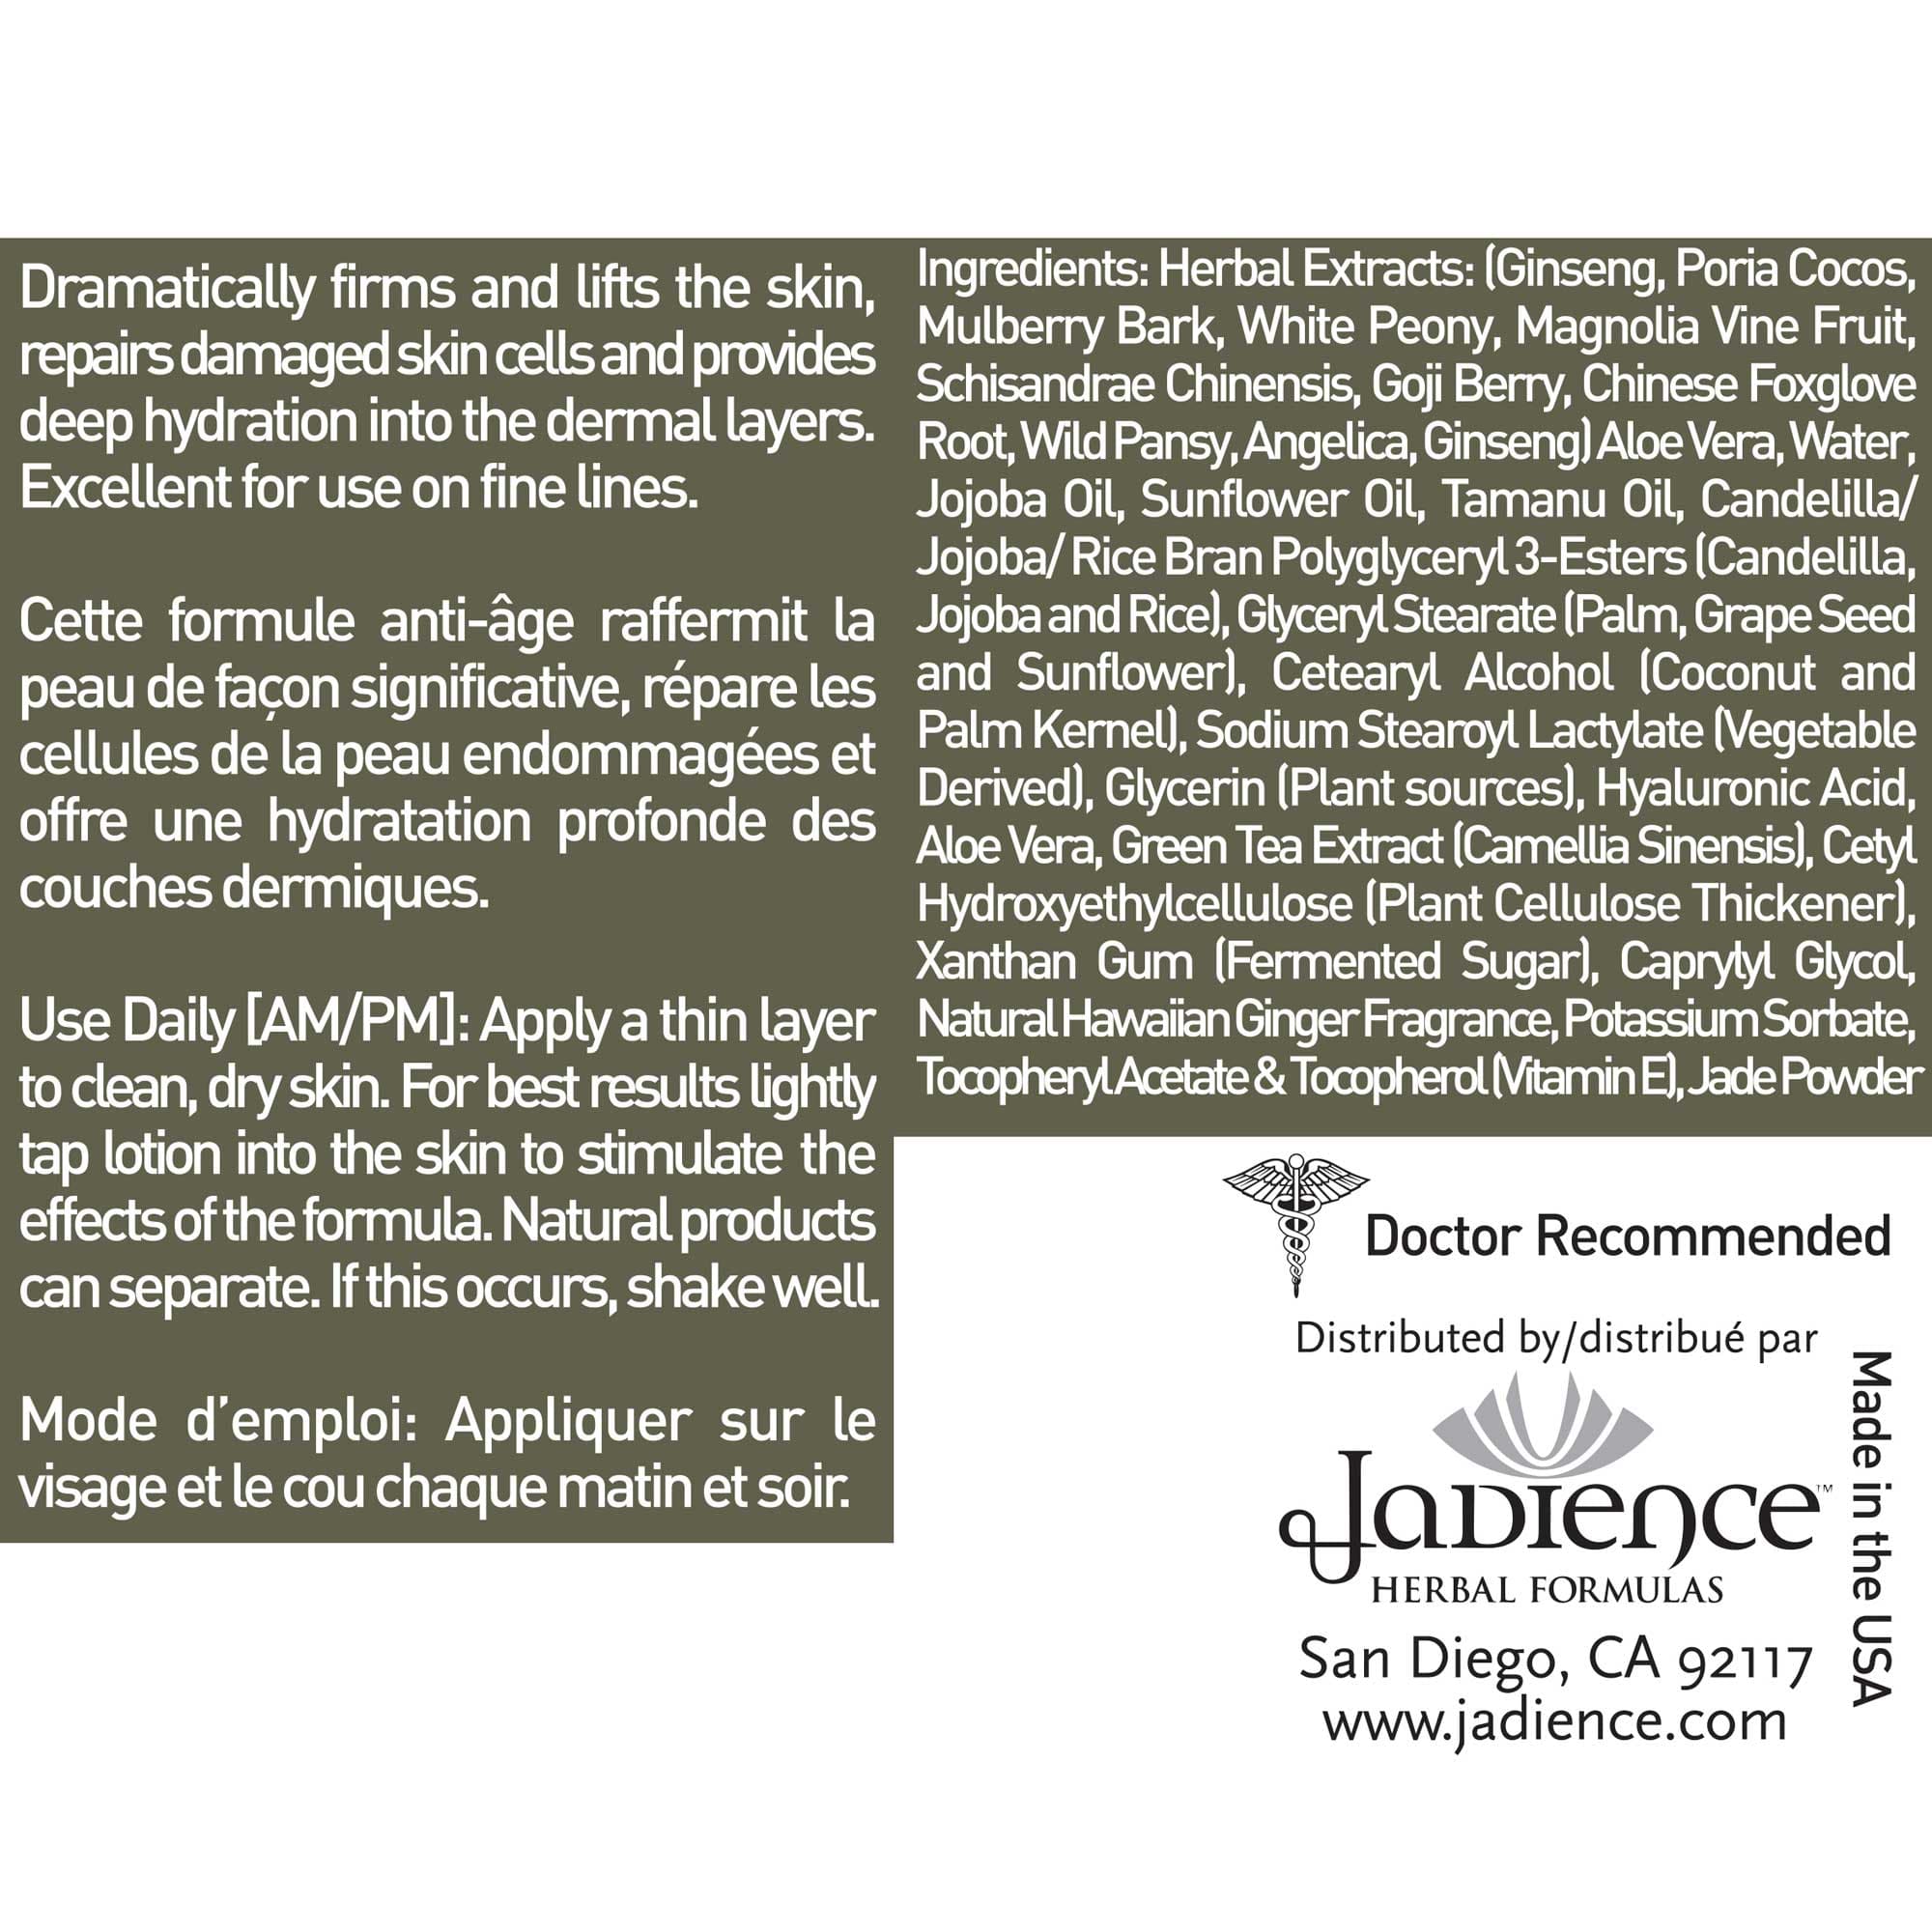 Jadience Herbal Formulas Jade and Ginseng Firming and Lifting Moisturizer Ingredients